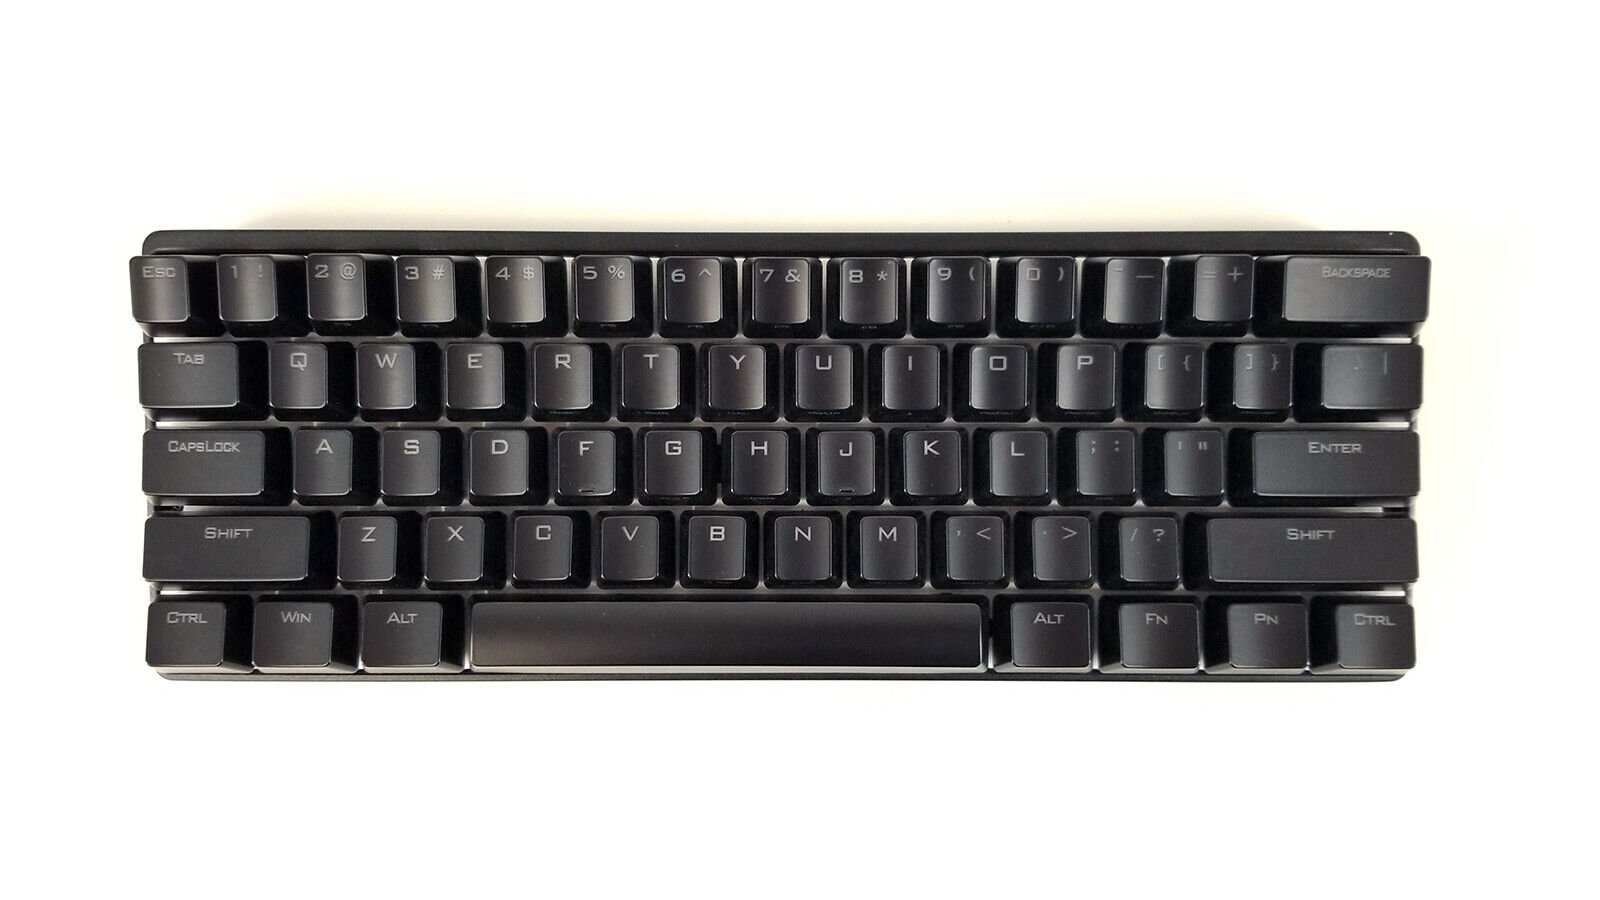 CODE VP3B (Vortex Pok3r) 60% Backlit Mechanical Keyboard 61-Key Cherry MX